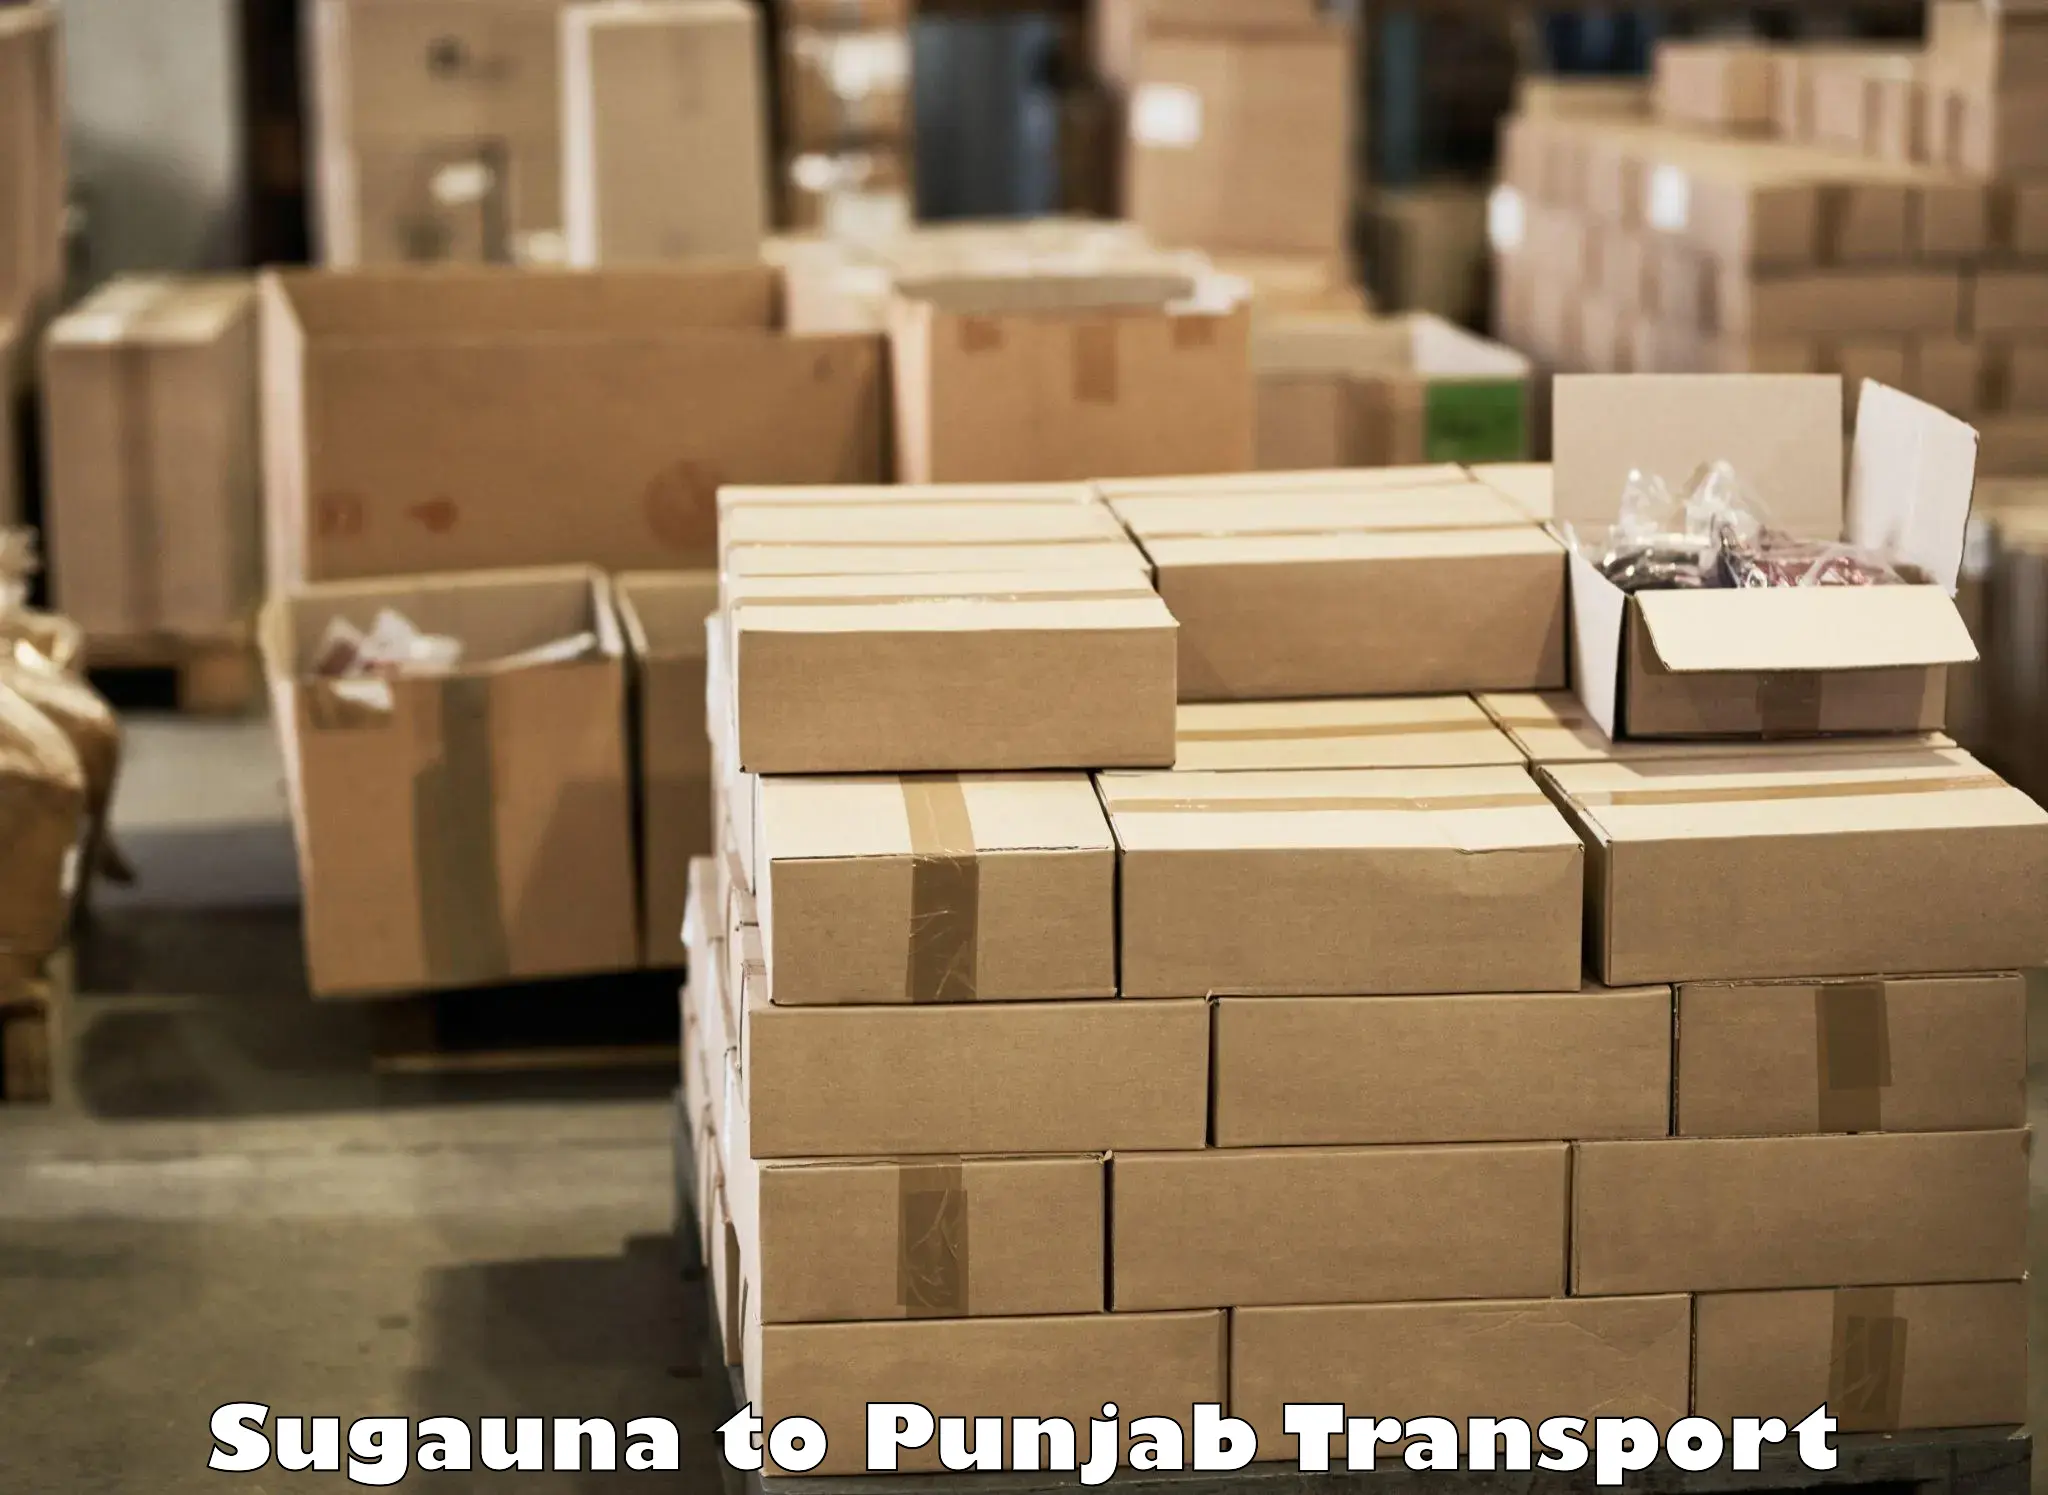 Vehicle transport services Sugauna to Punjab